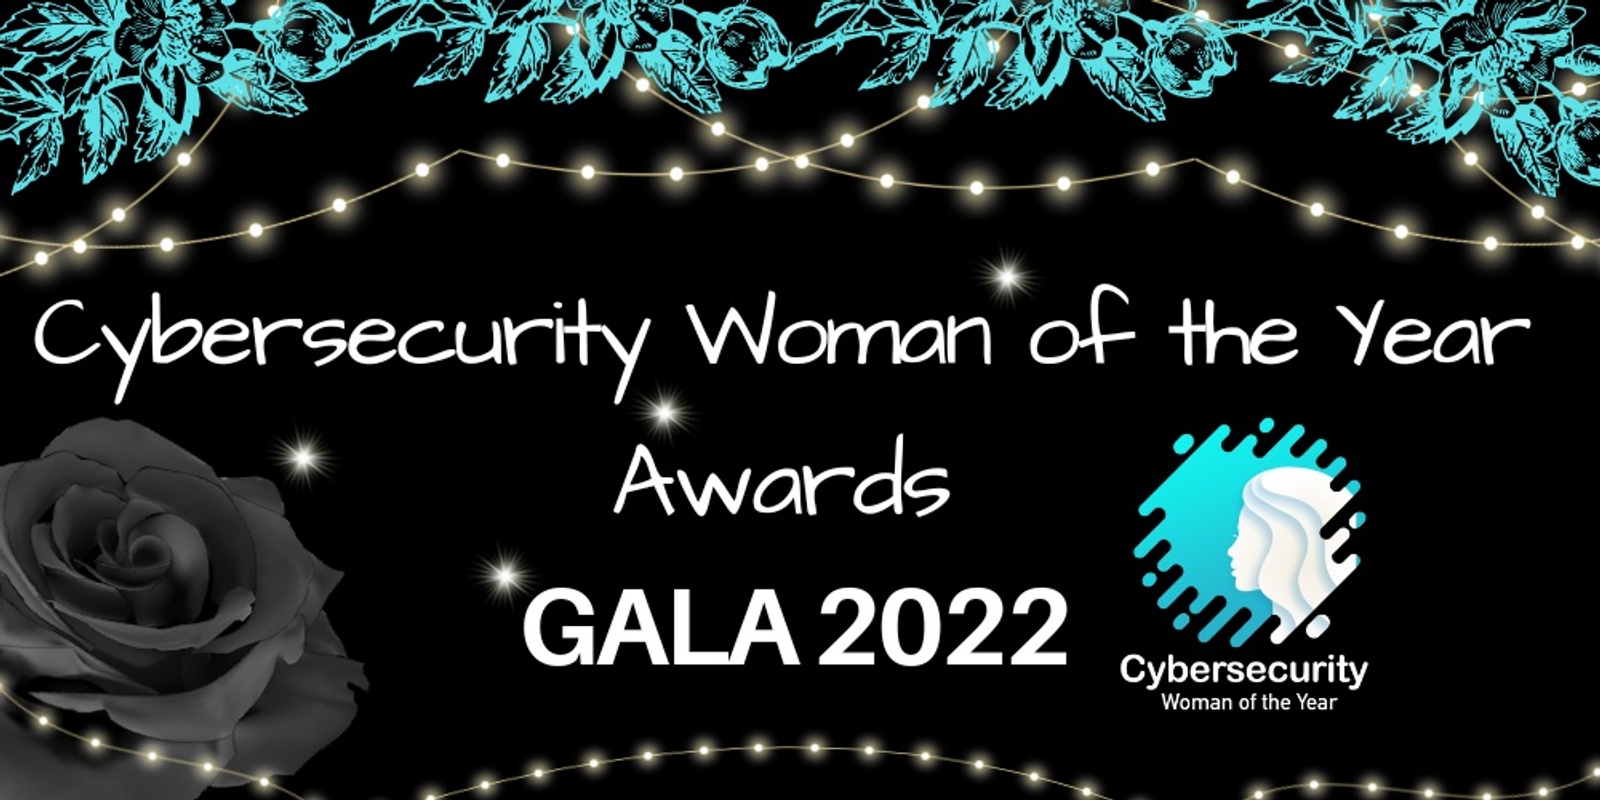 Cybersecurity Woman of the Year Awards GALA 2022 in Las Vegas Humanitix